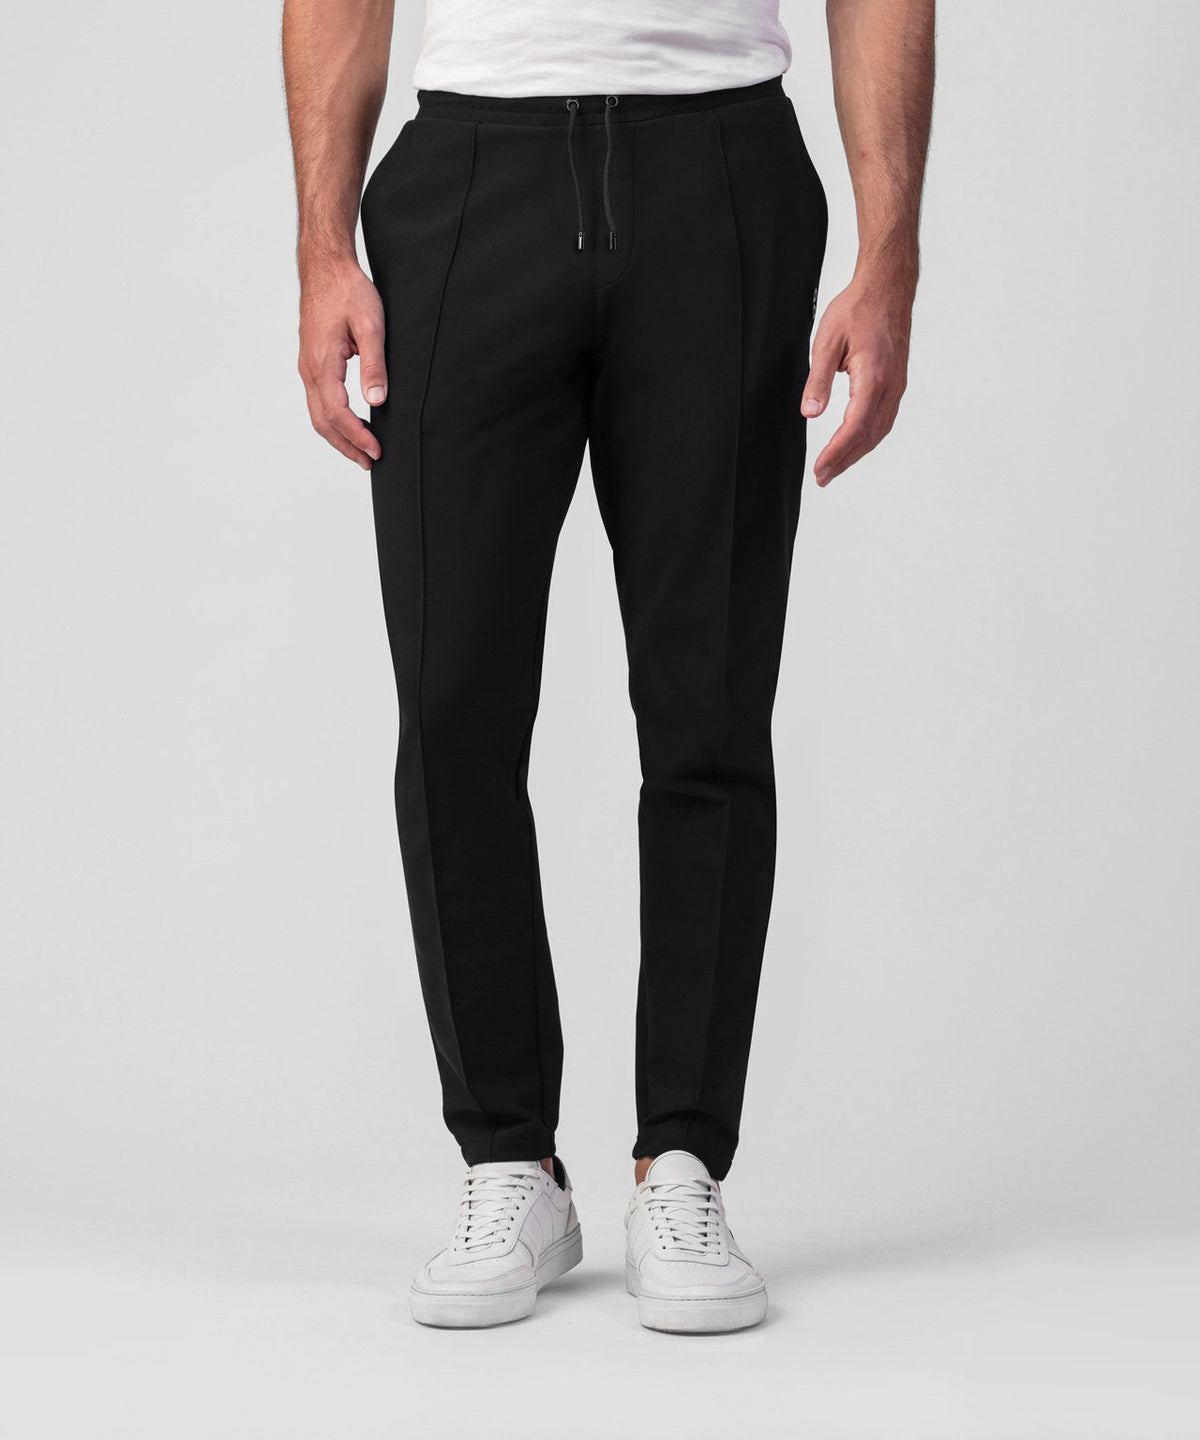 Pantalon coupe droite en tissu stretch: Noir